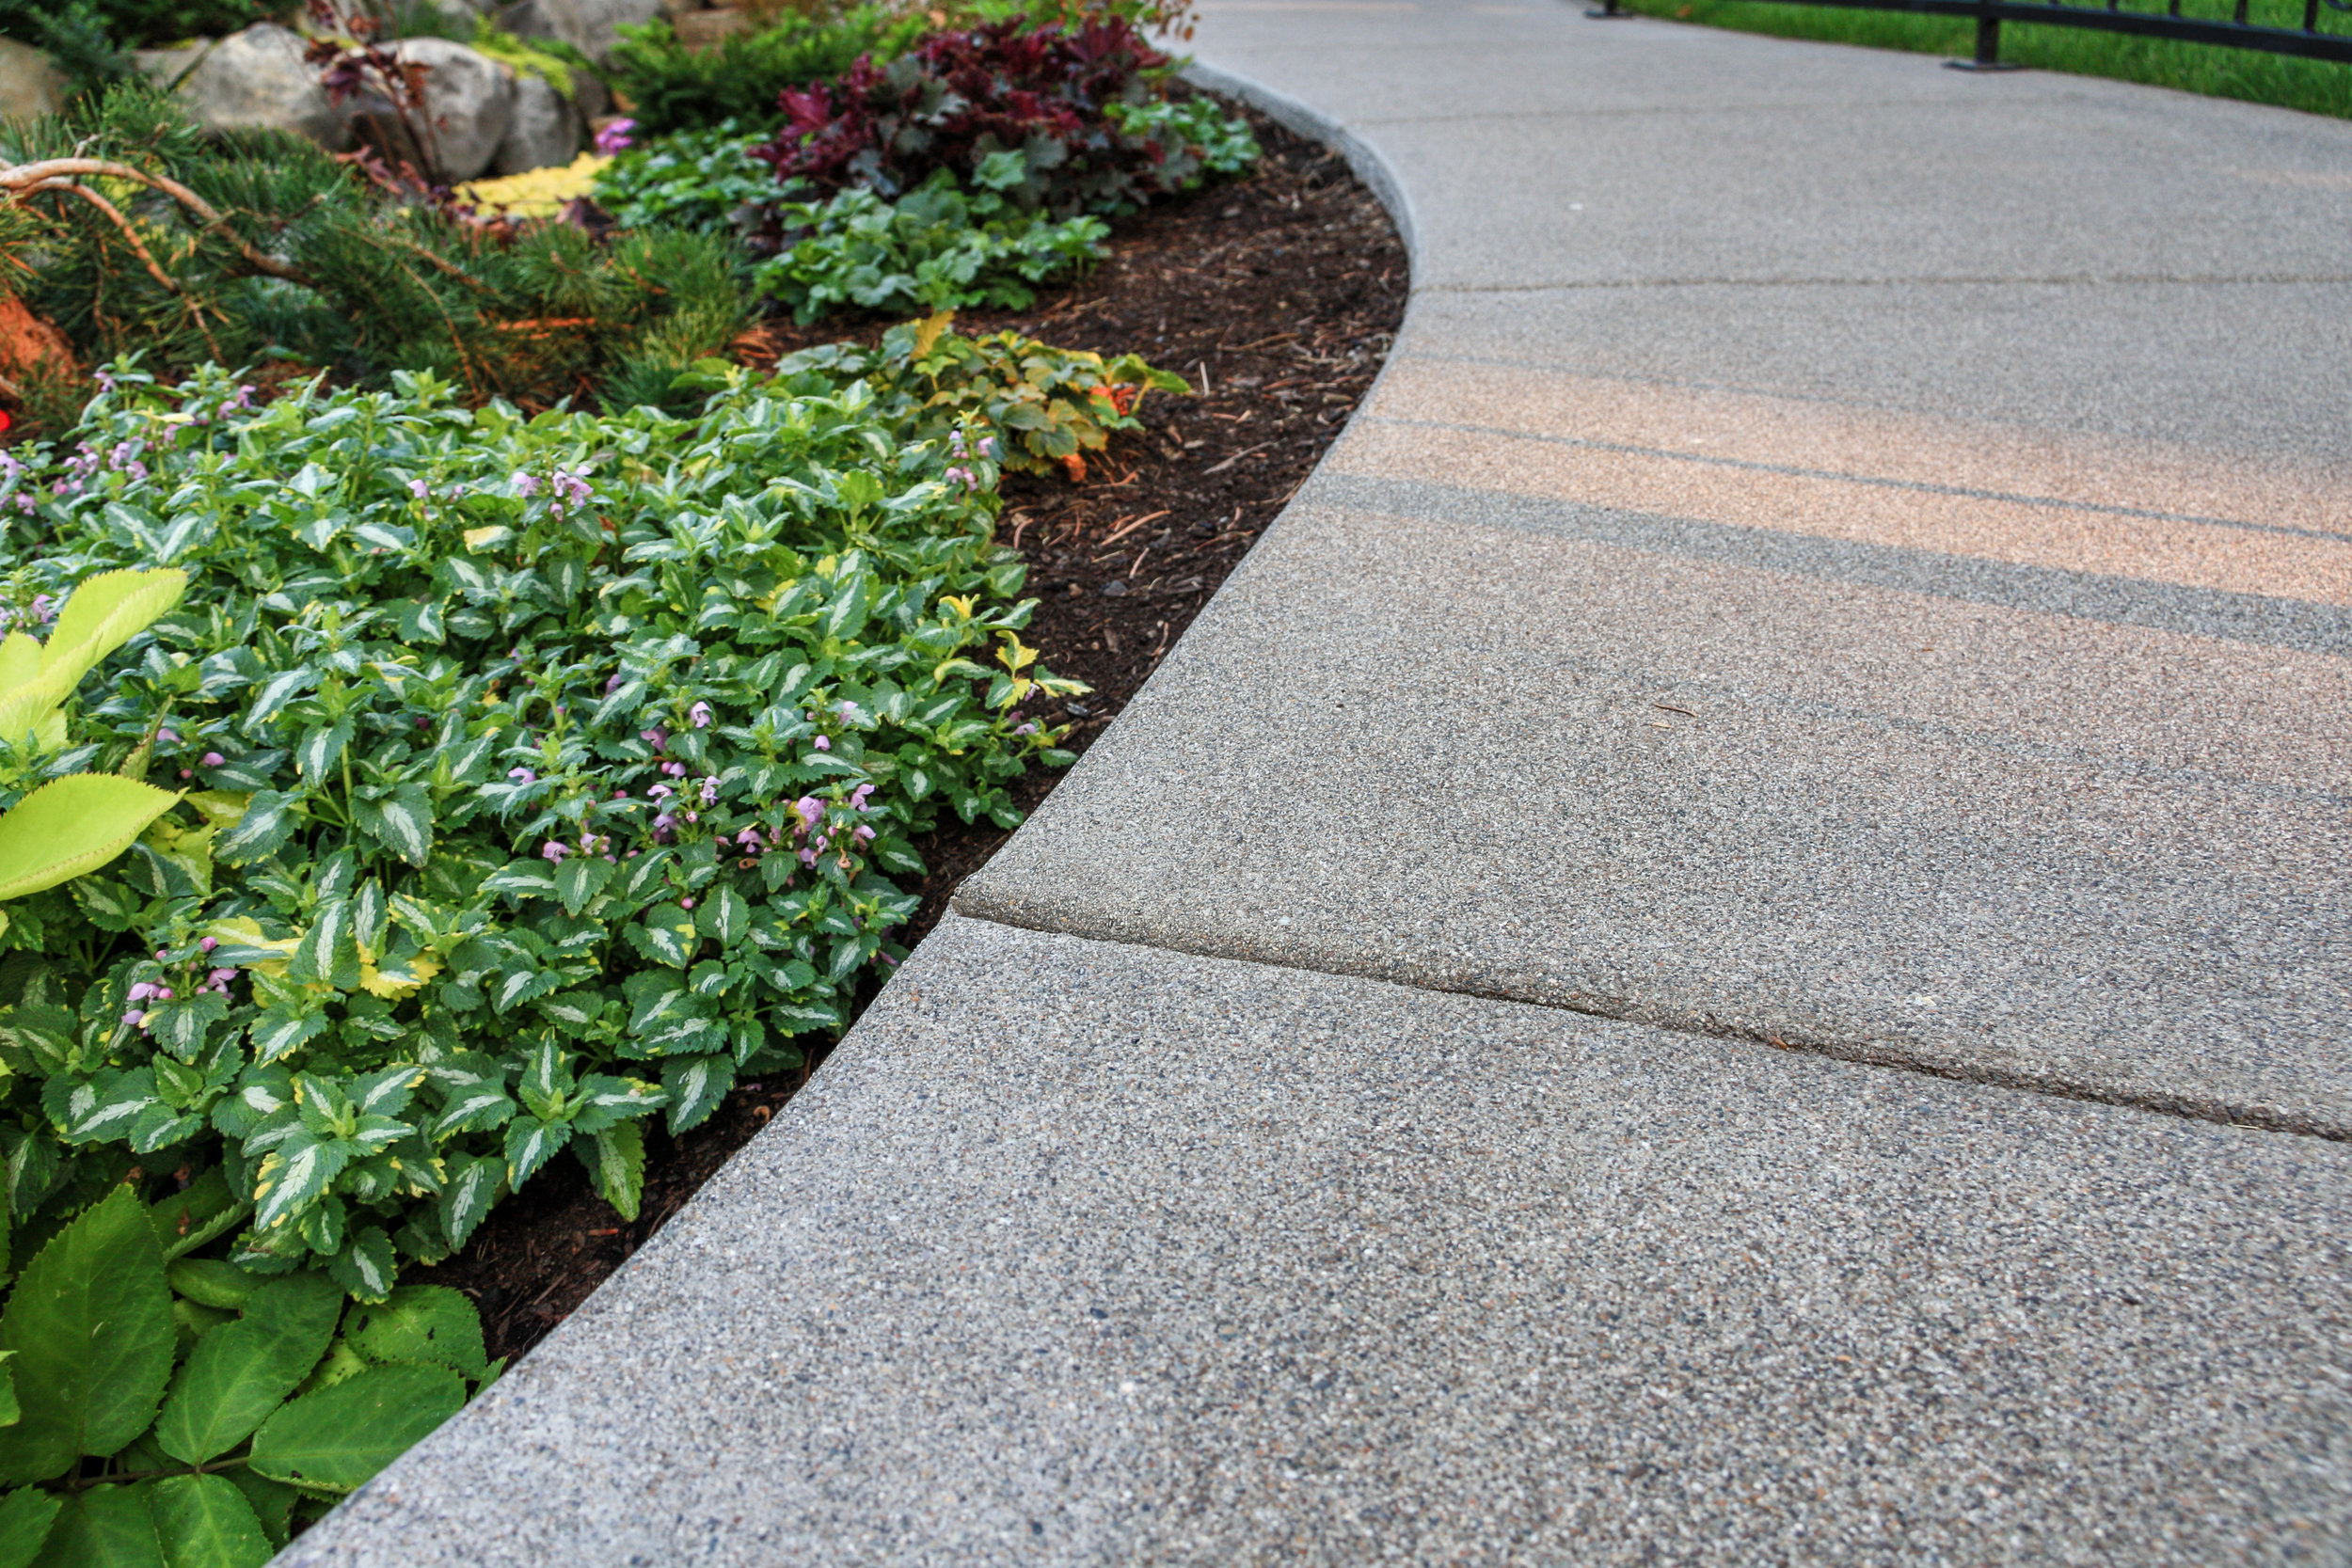 spokane sandwashed concrete sidewalk with anne greenaway lamium